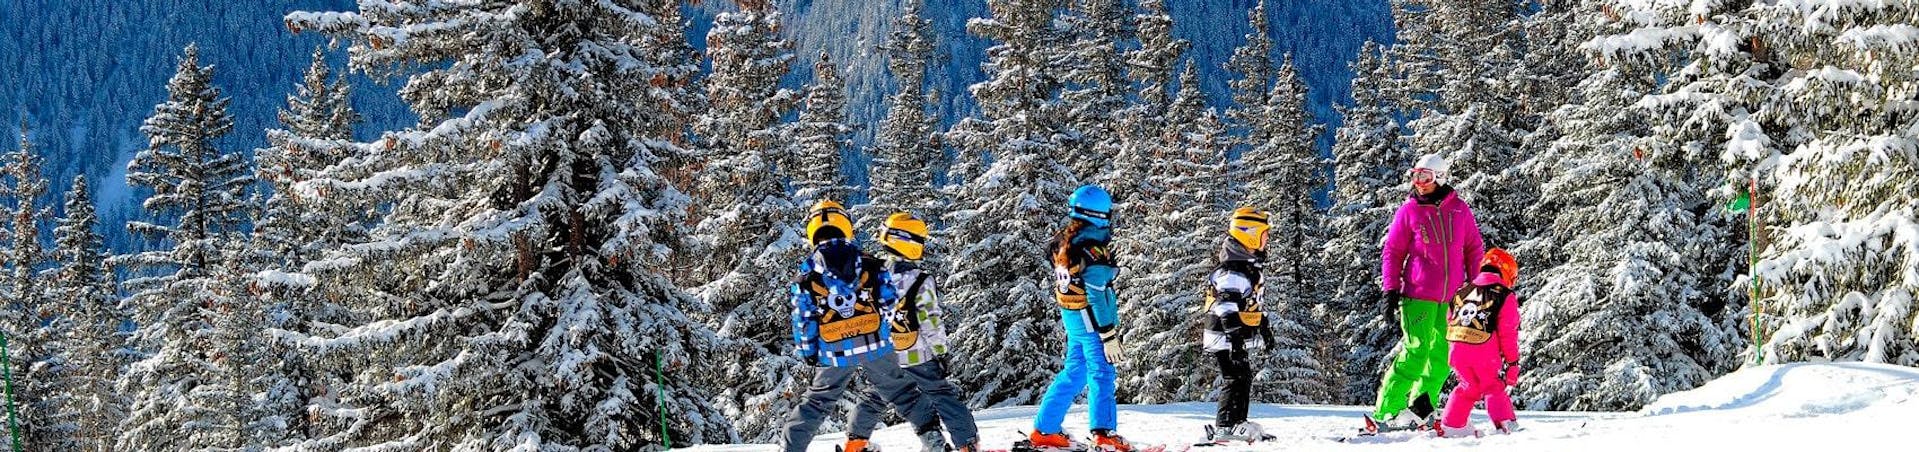 Private Ski Lessons for Kids.